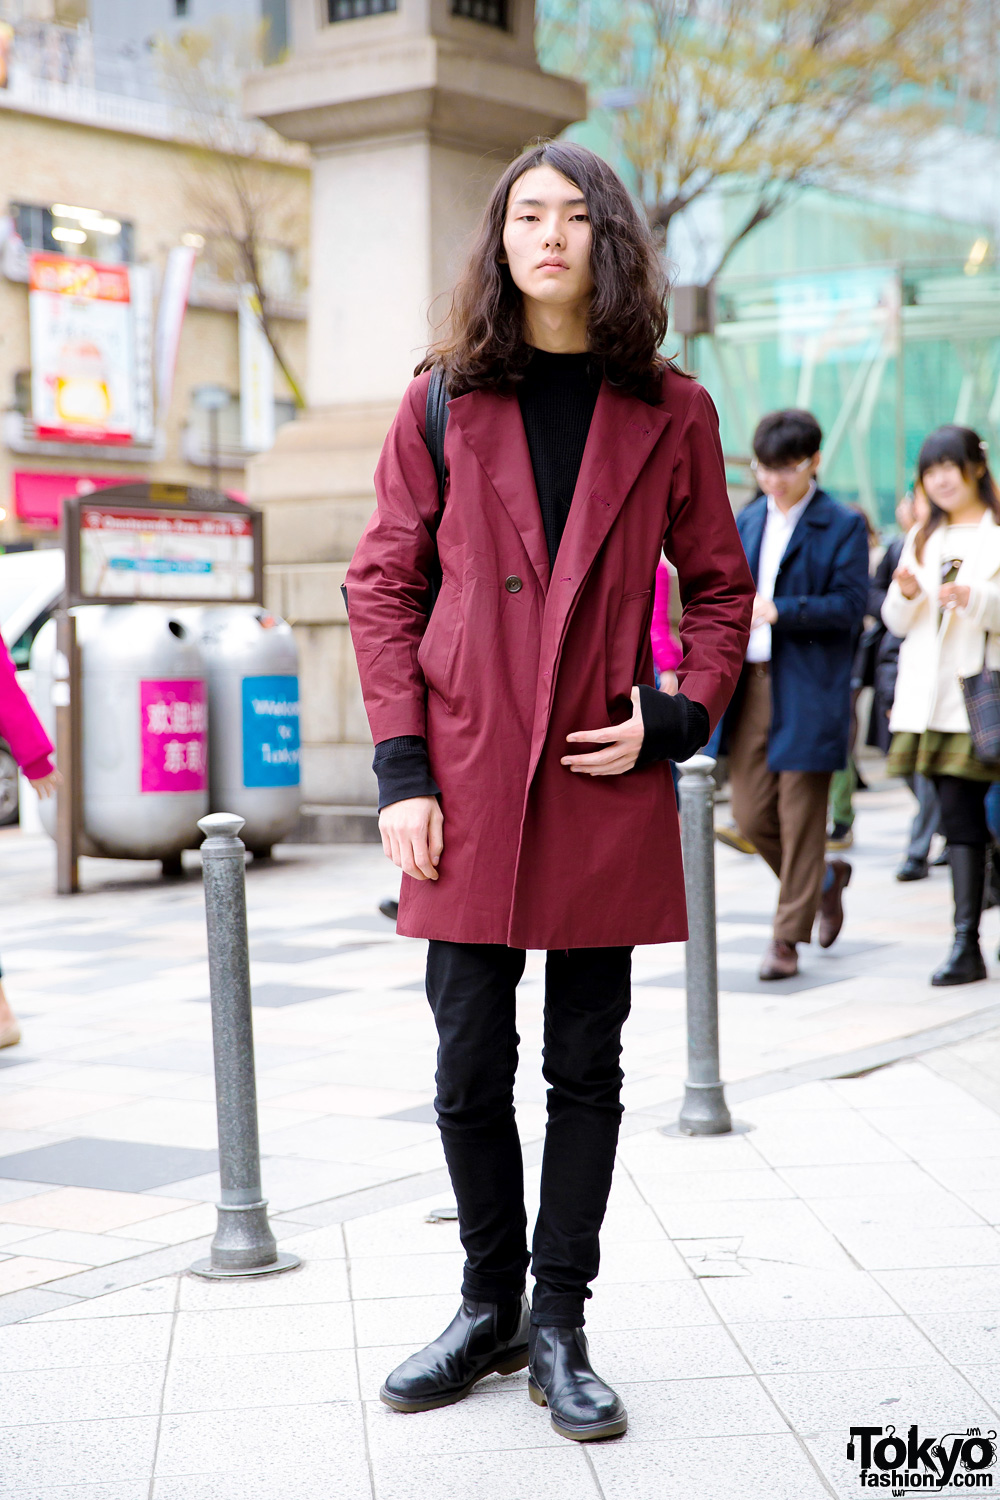 Japanese Male Fashion Model Street Style w/ LAD Musician, Hare, UNIQLO & Dr. Martens